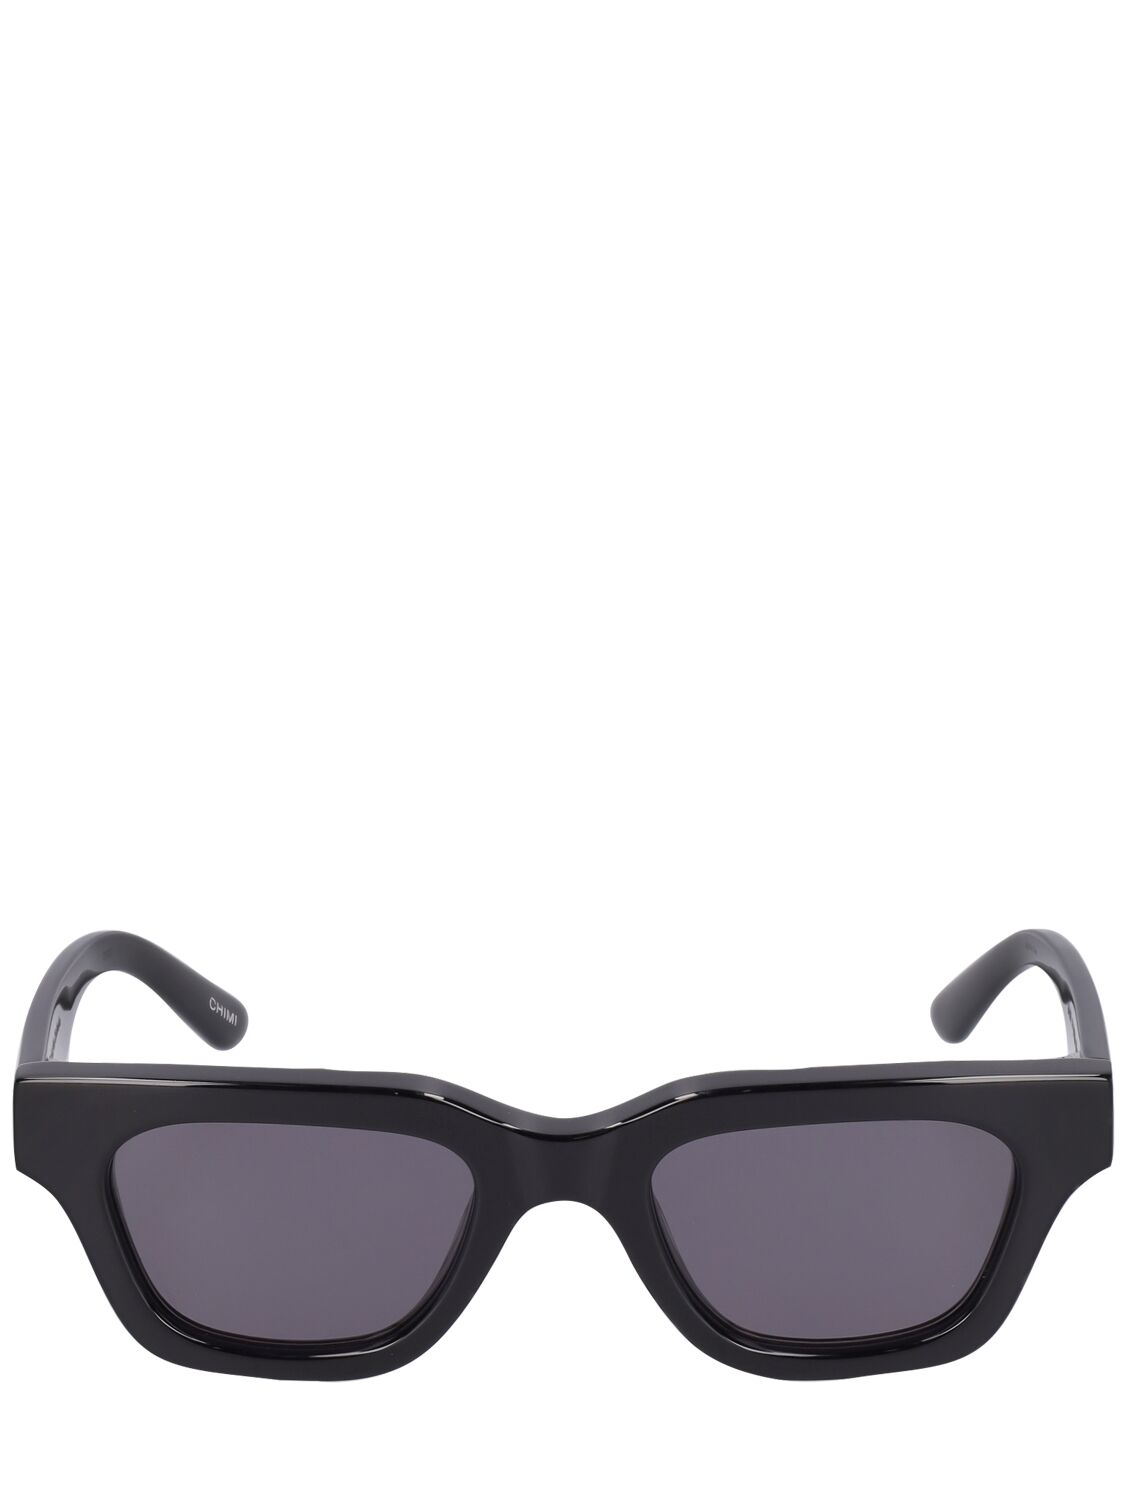 Chimi 11 Squared Acetate Sunglasses In Black